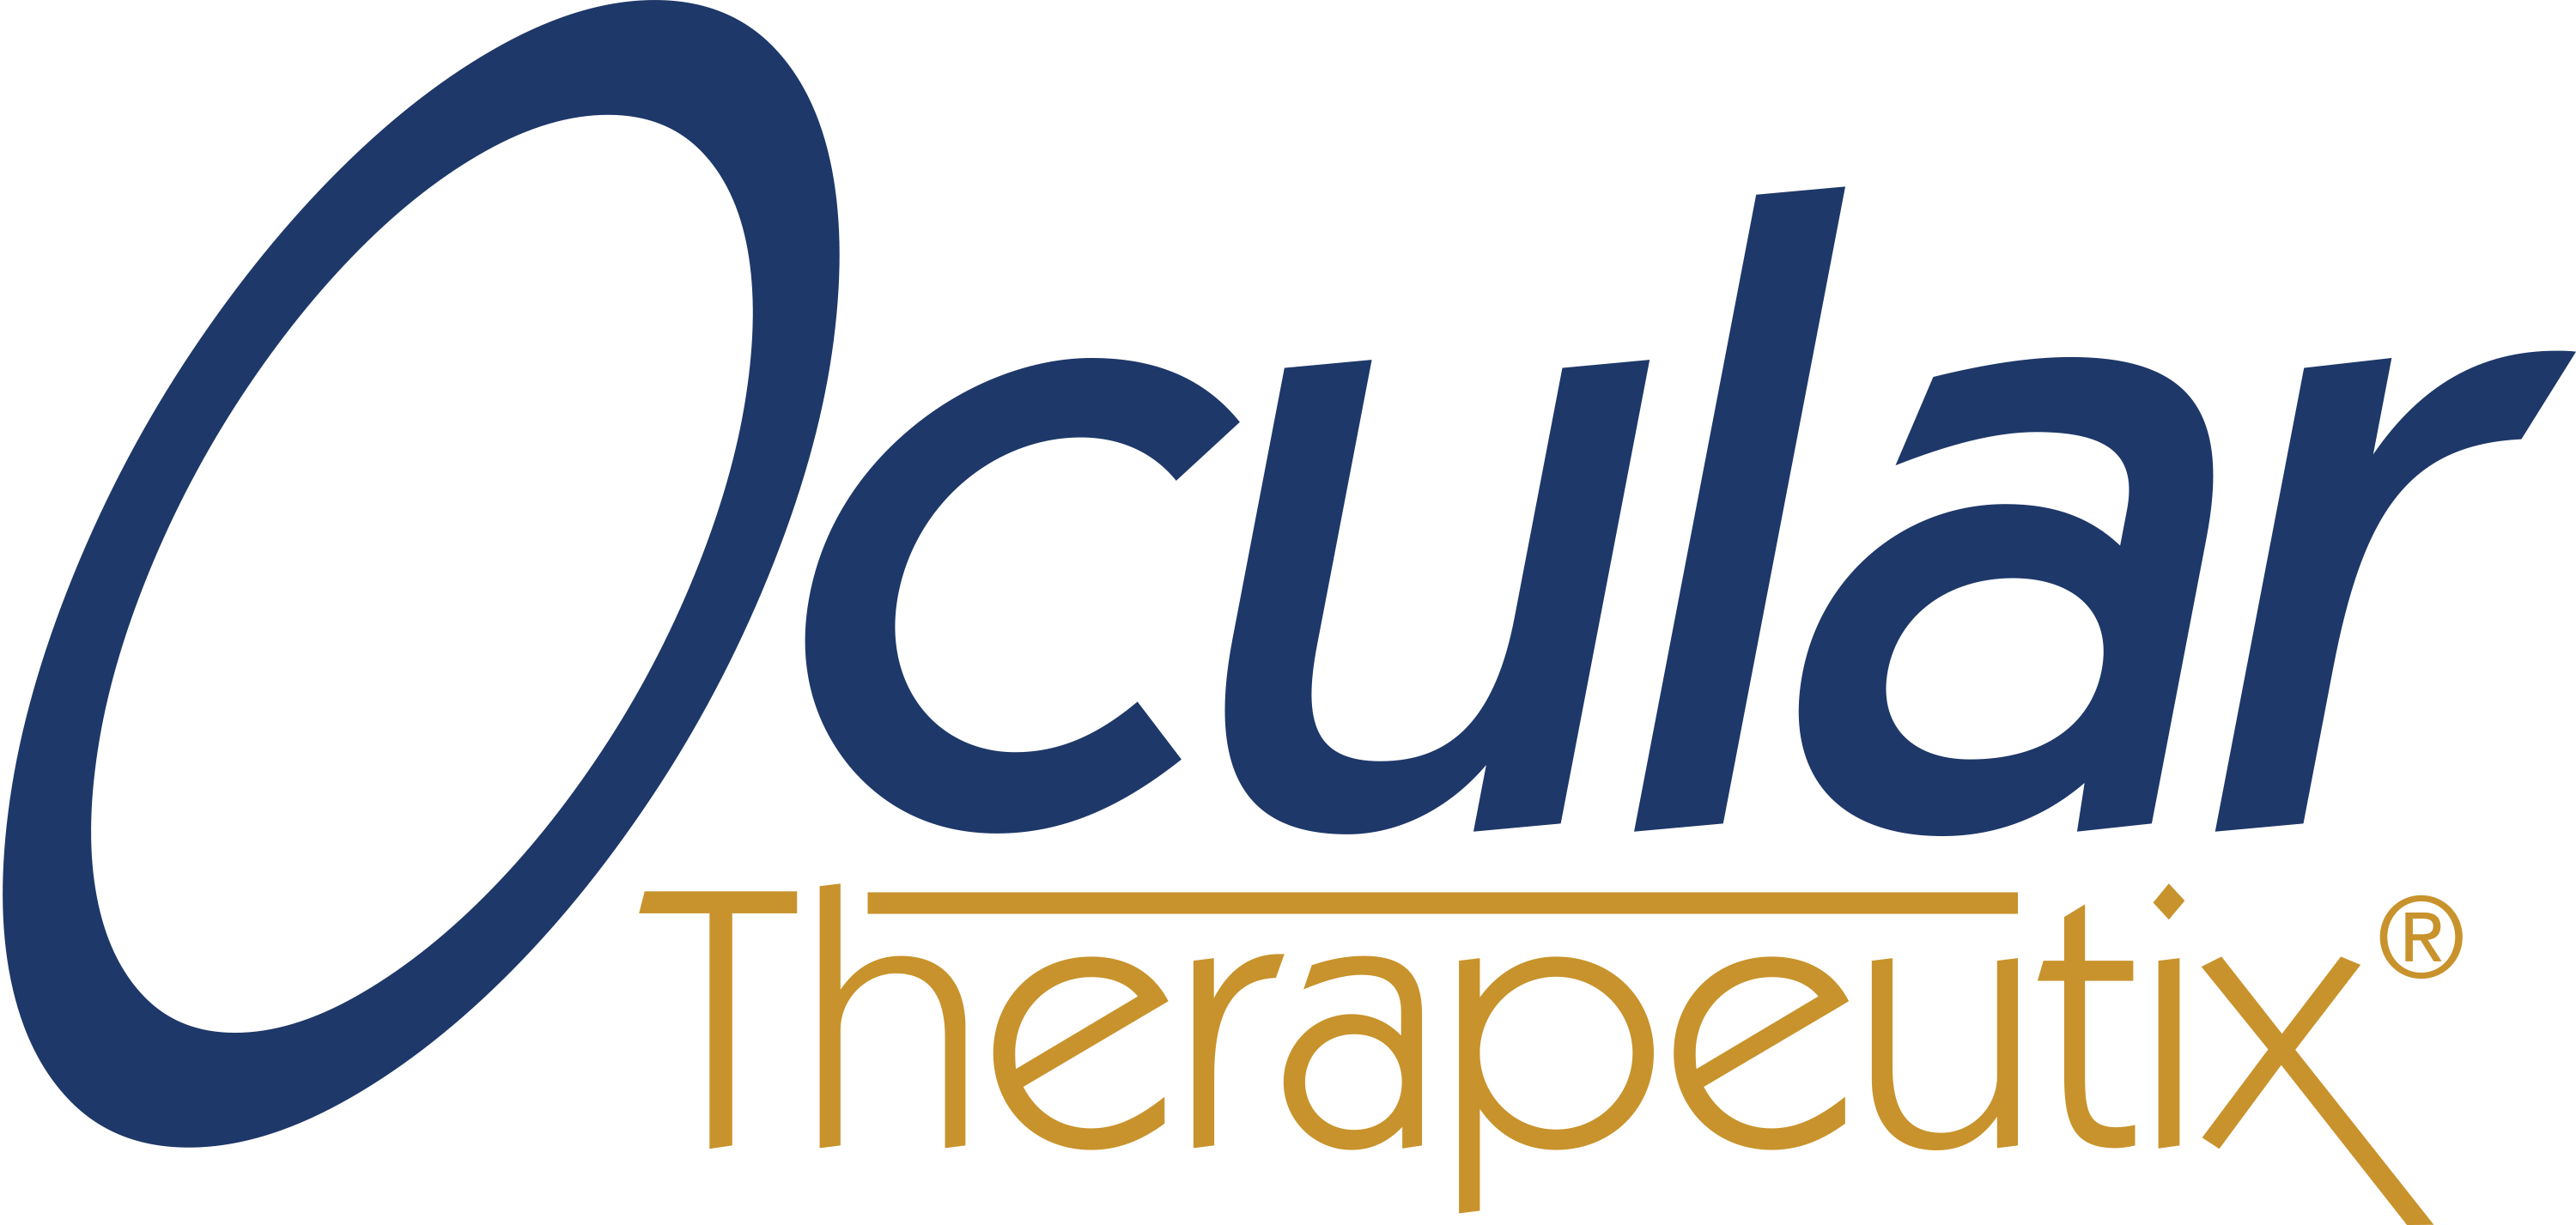 Ocular Therapeutix Logo